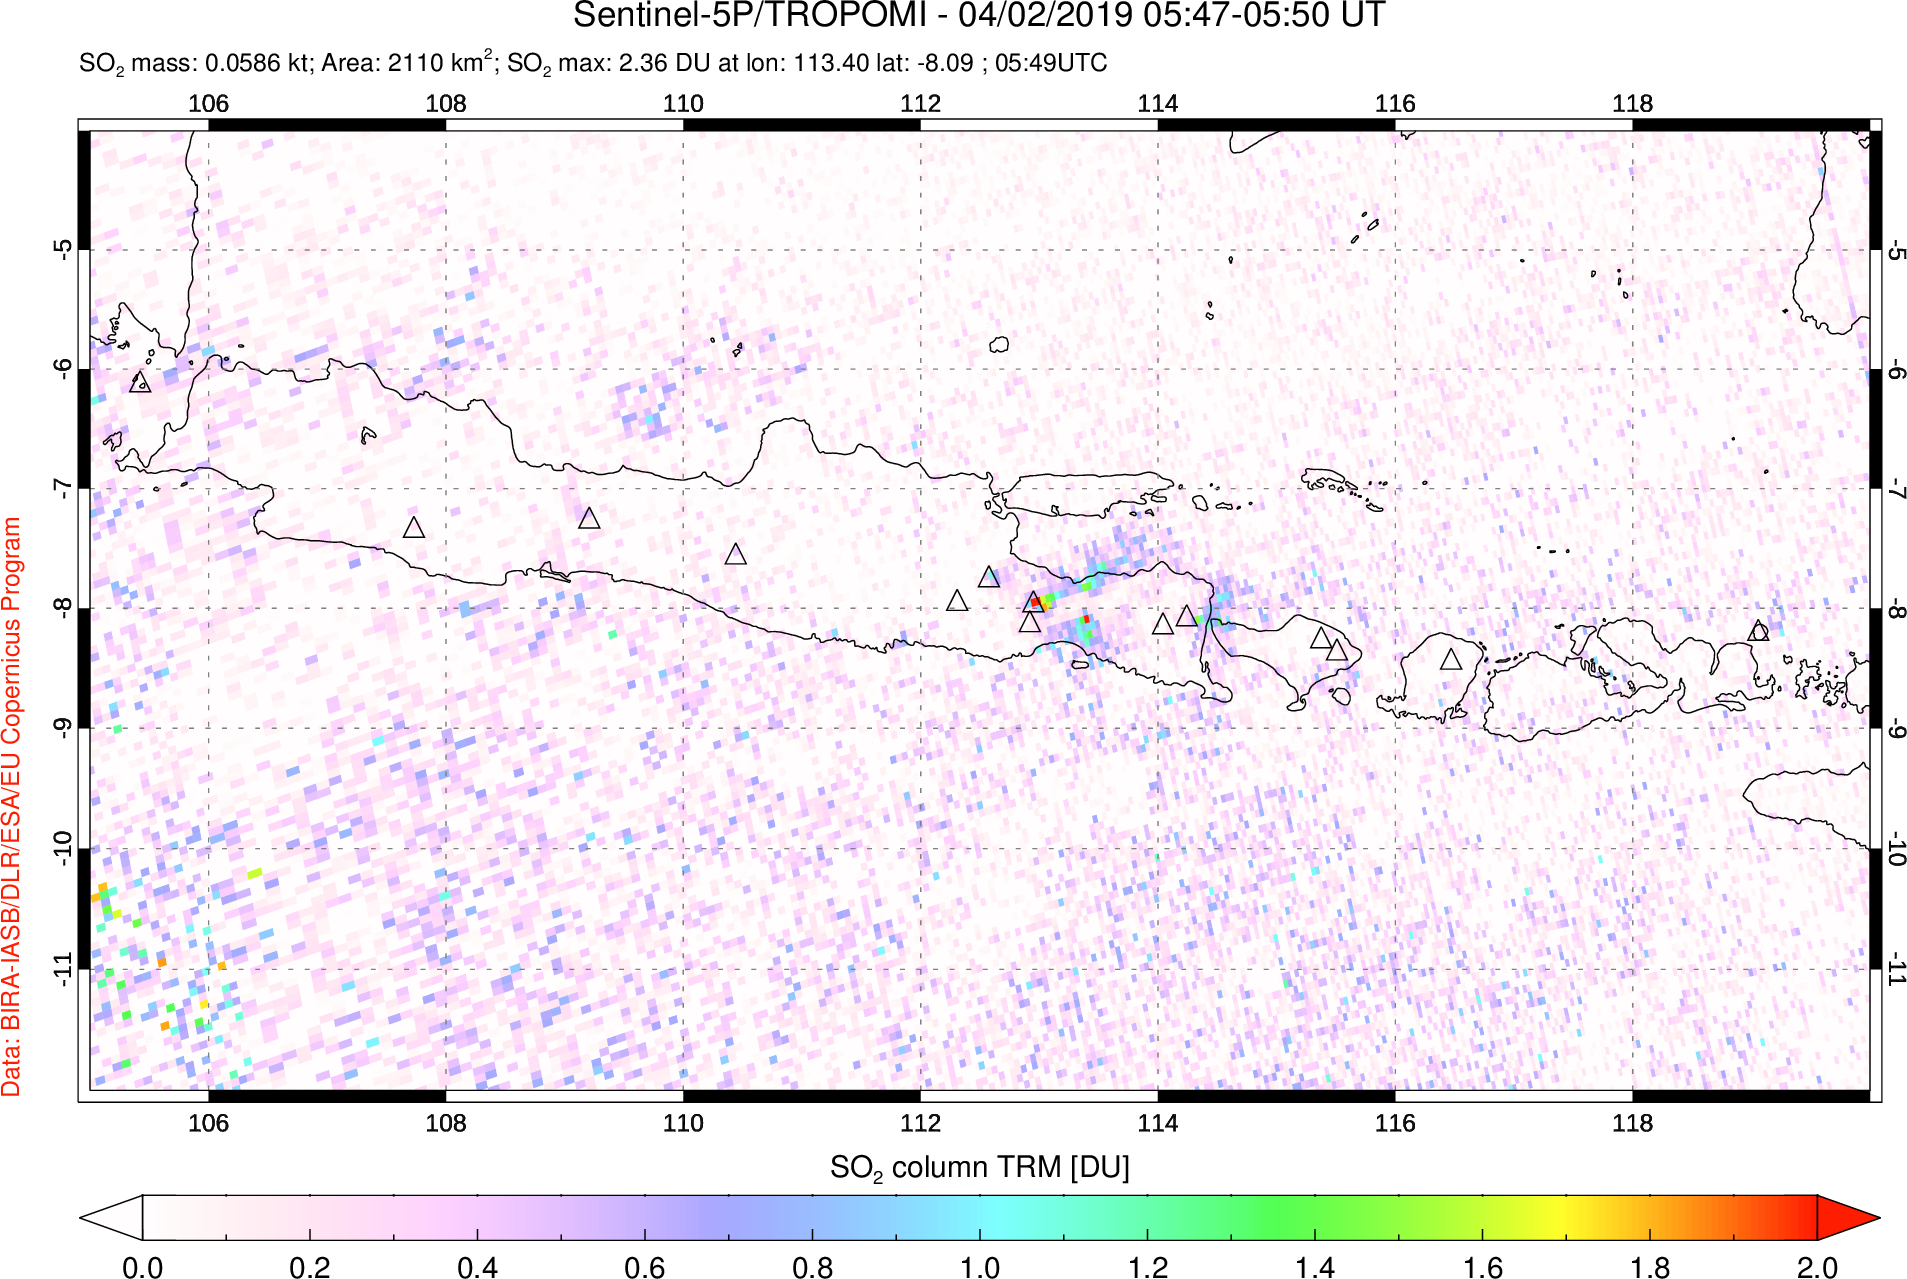 A sulfur dioxide image over Java, Indonesia on Apr 02, 2019.